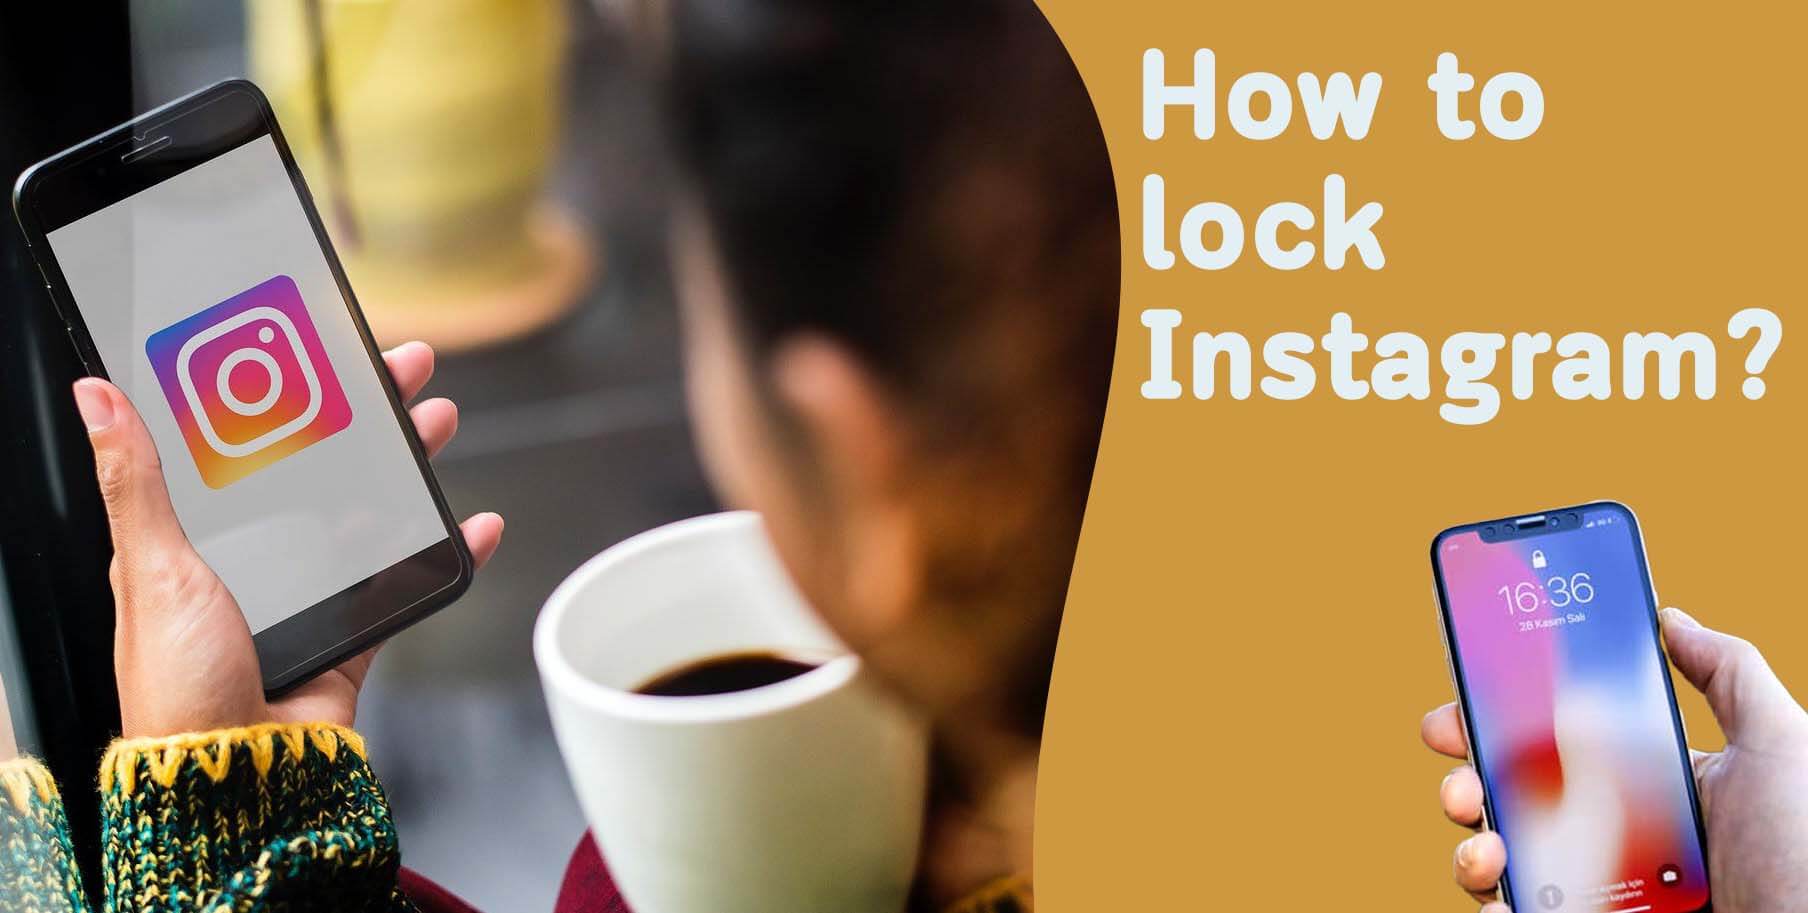 How to lock Instagram?